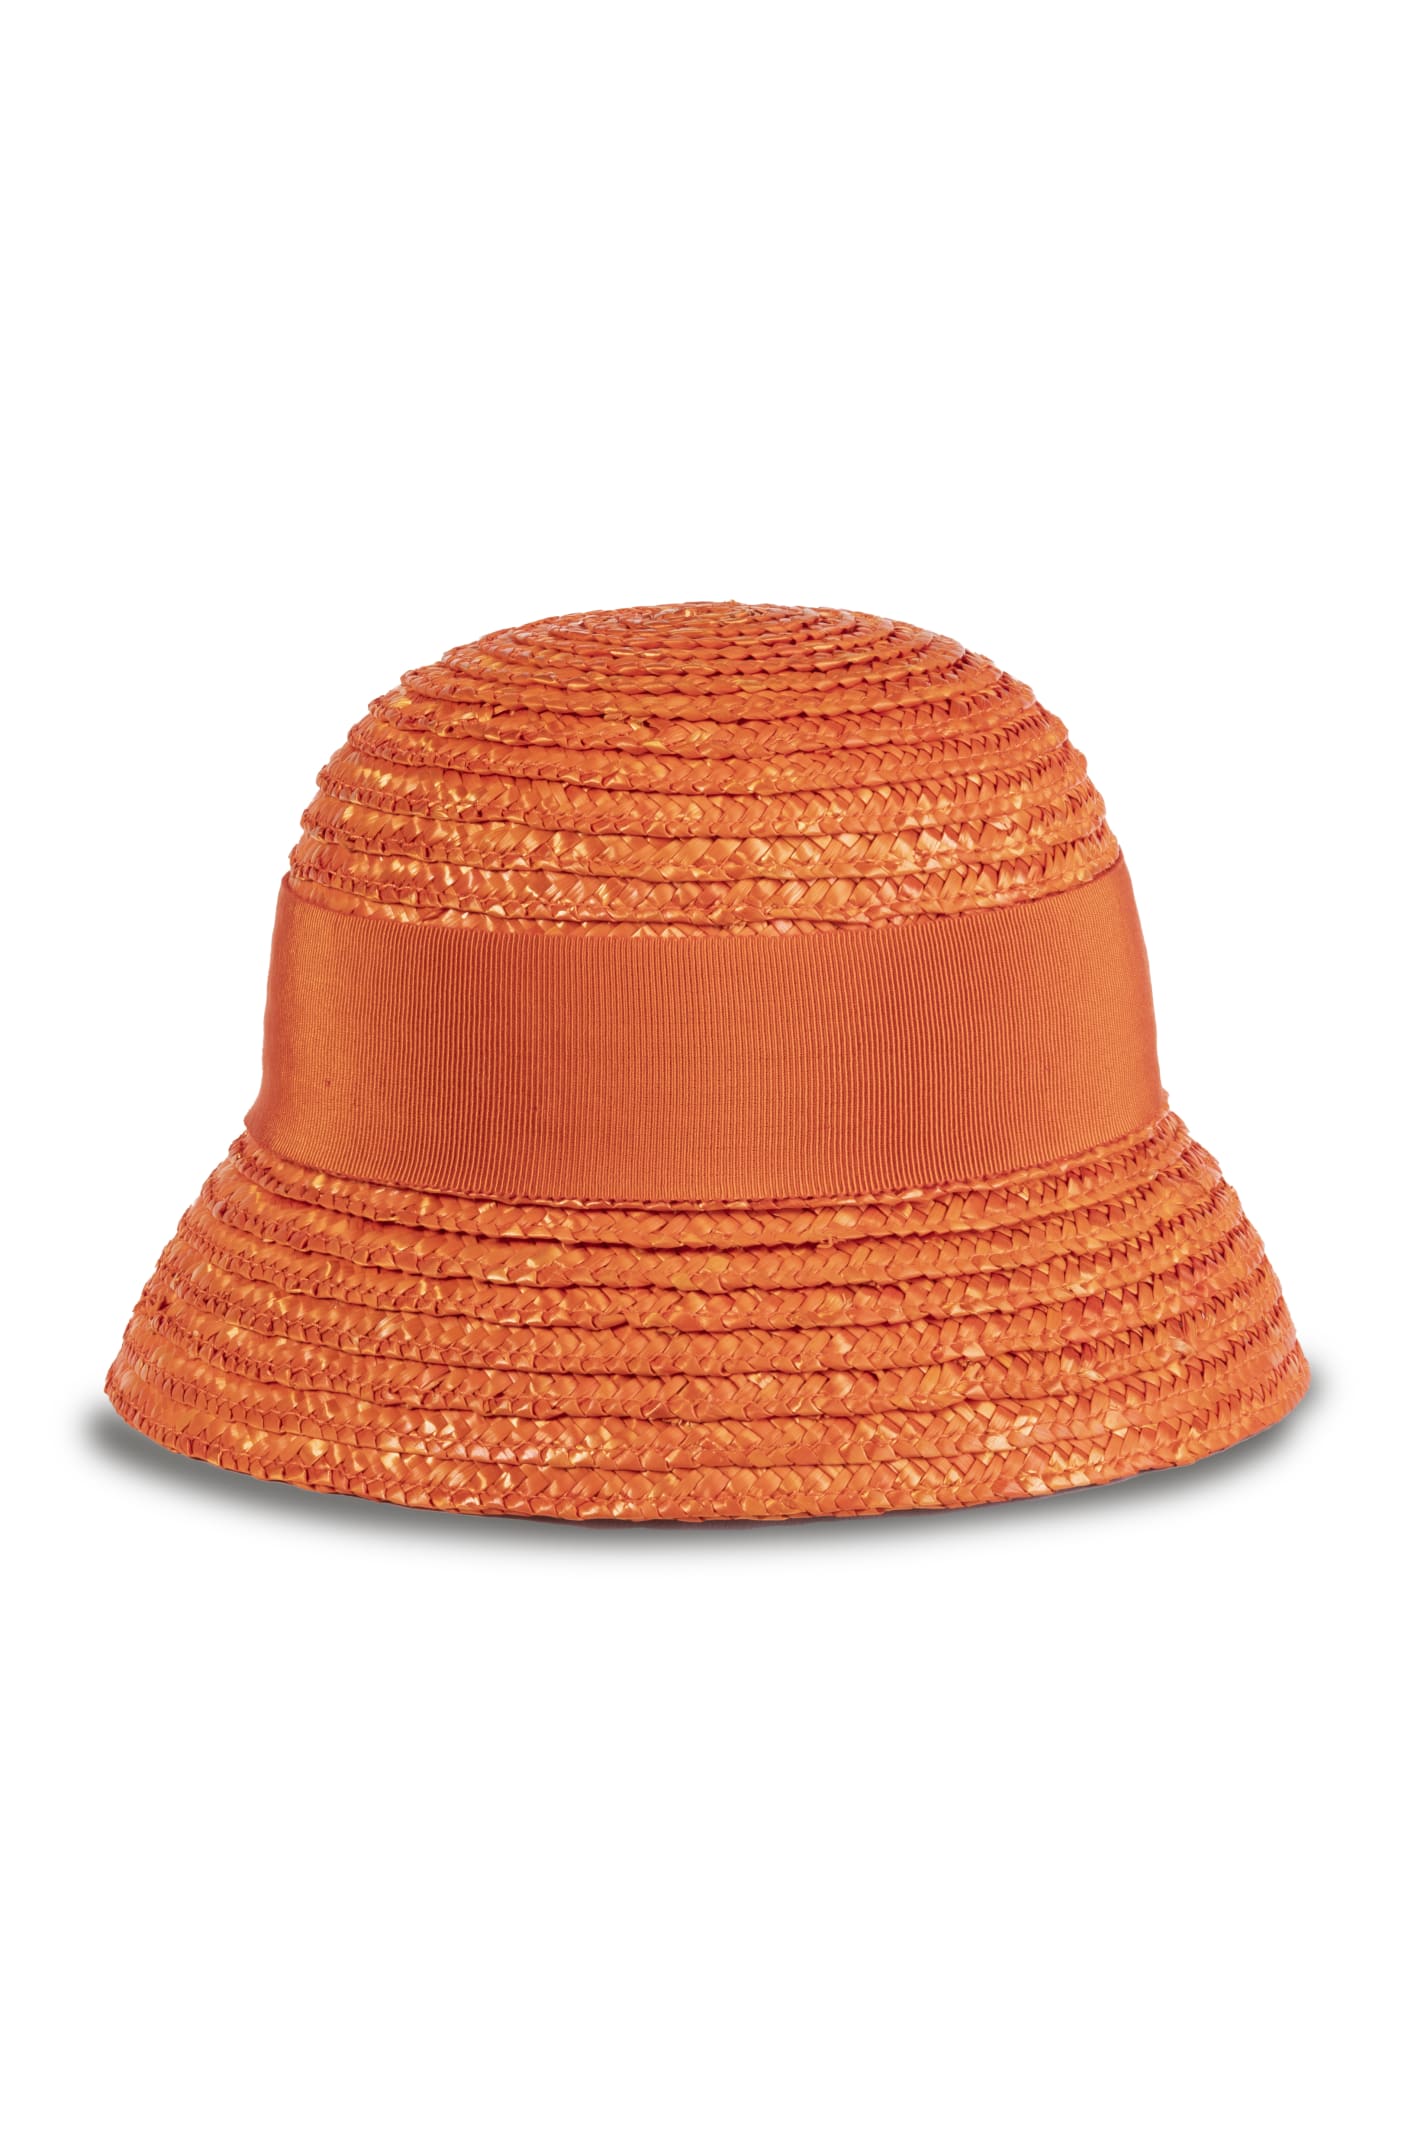 MiMiSol Bucket Hat